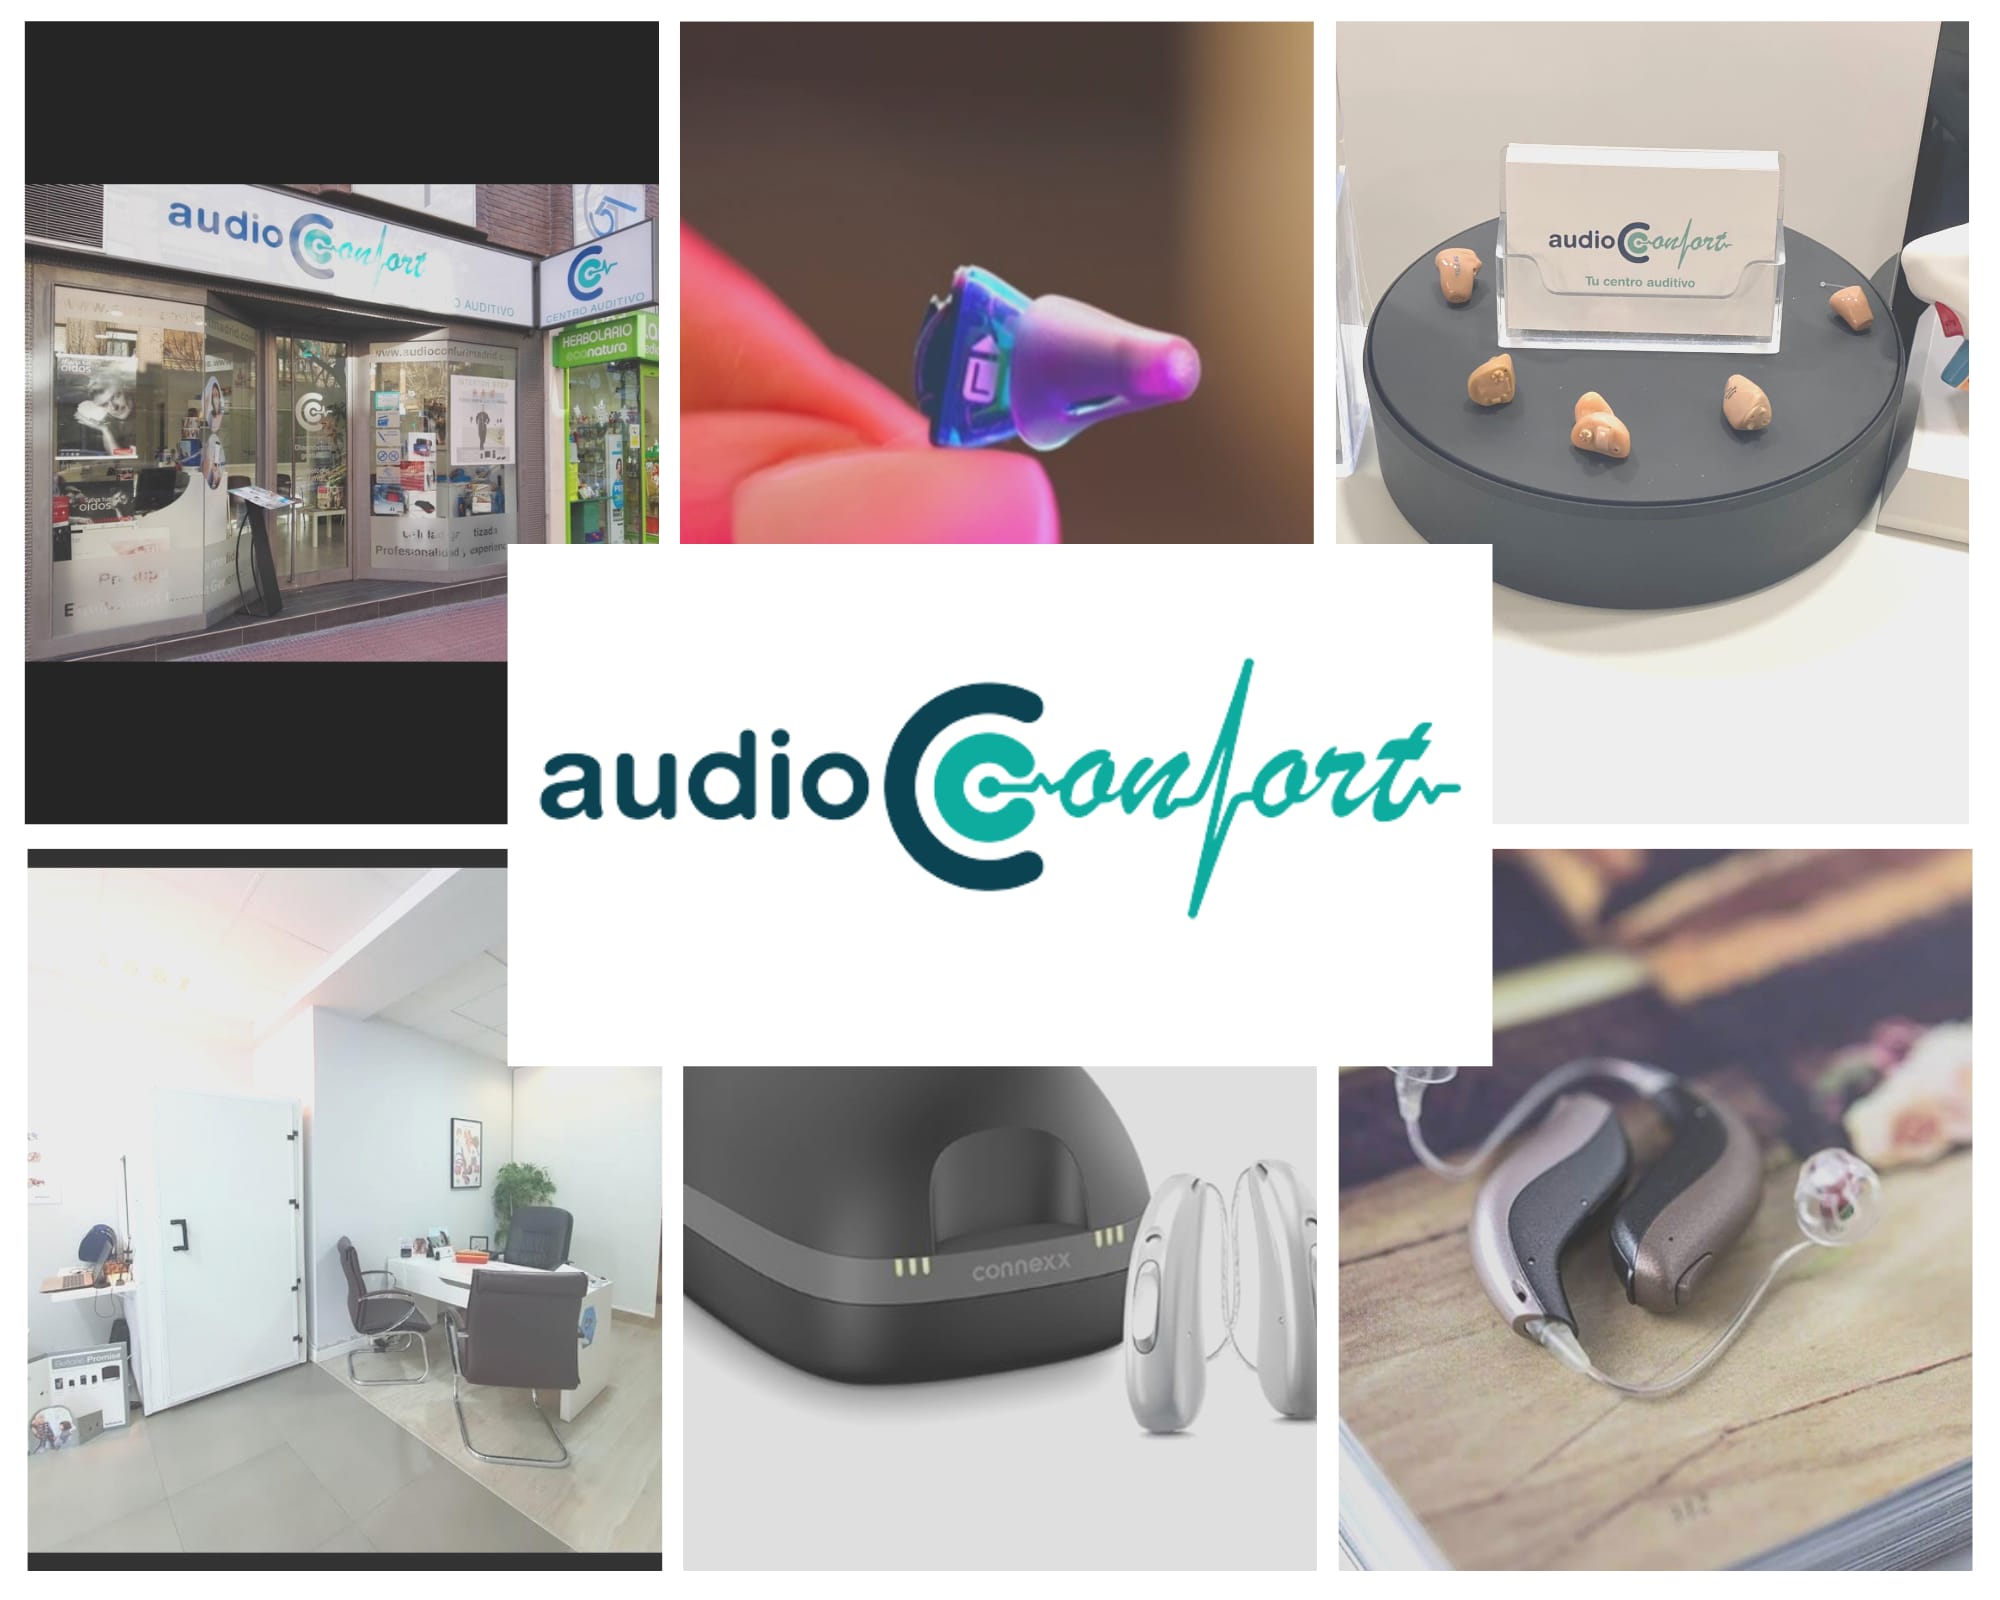 Audioconfort centros auditivos audífonos multimarca en zona Sur